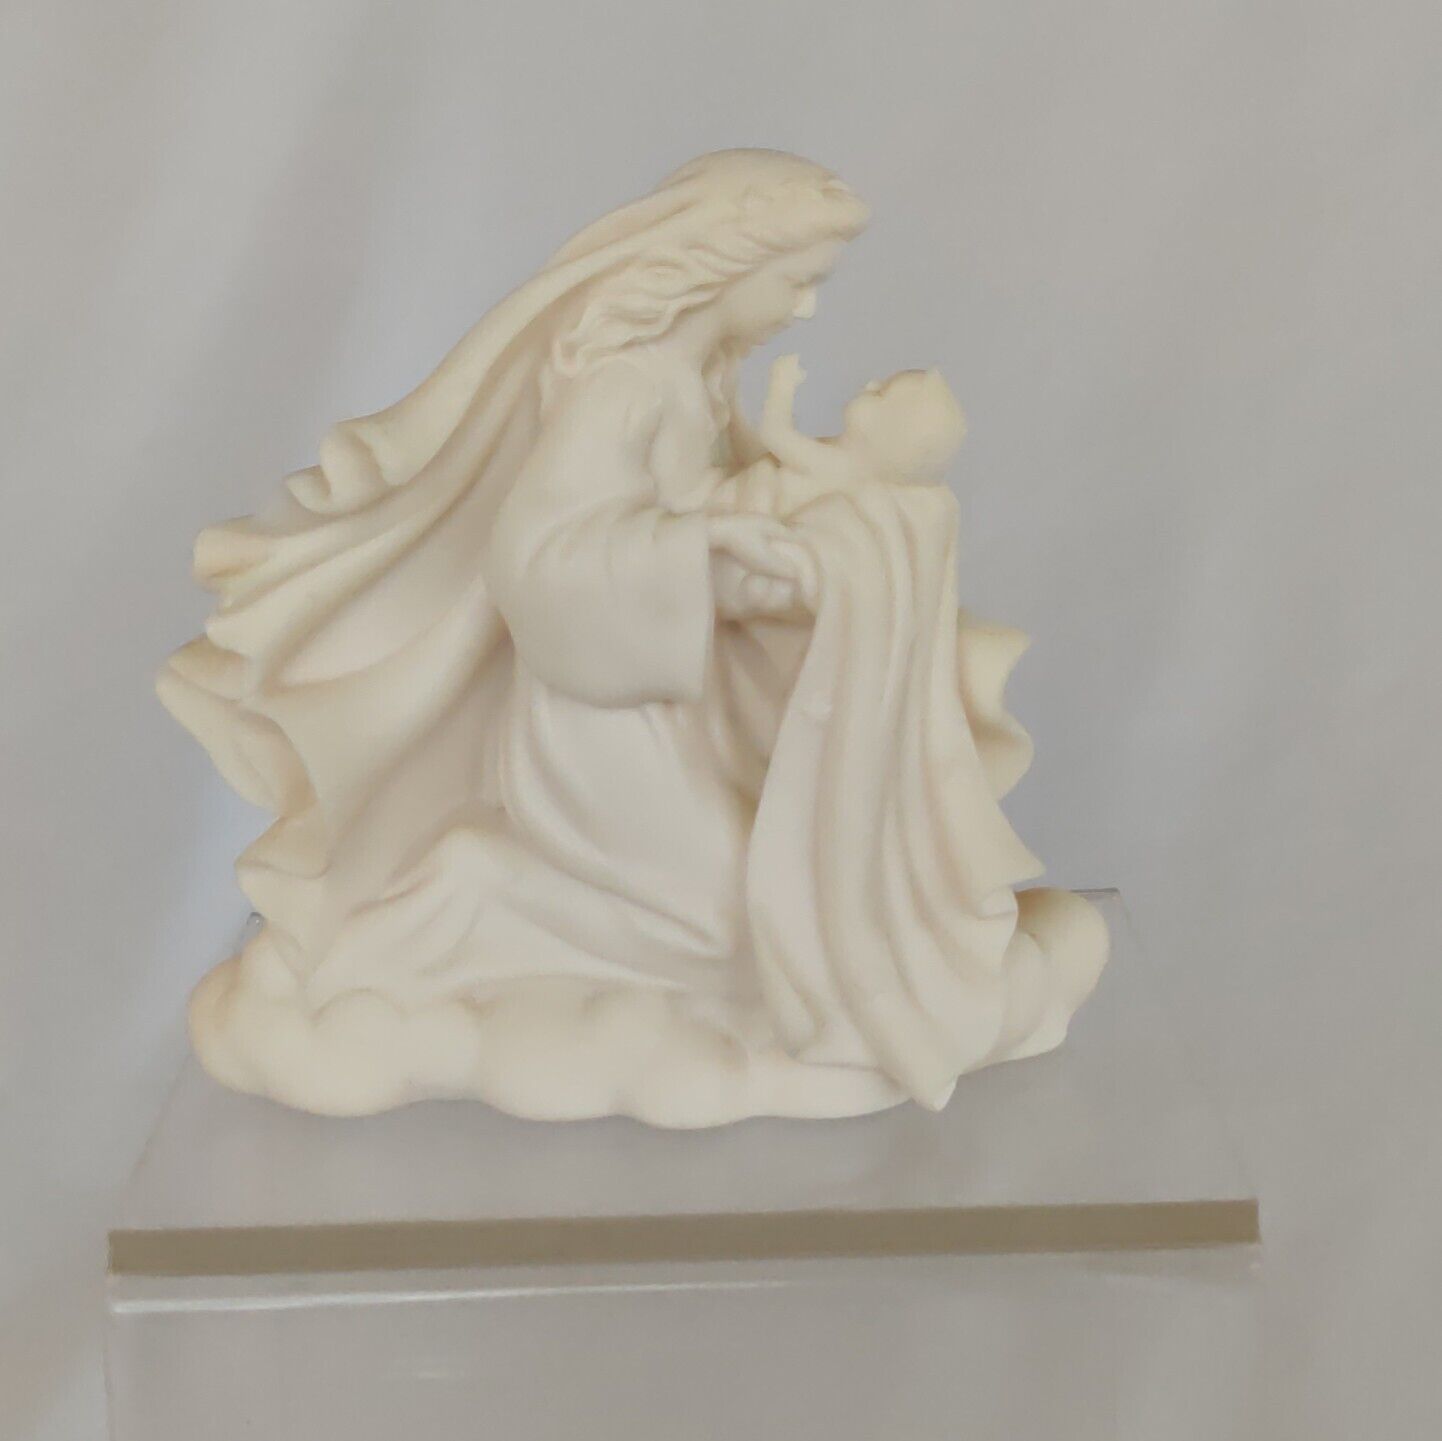 Roman Inc. Millennium “Prince of Peace” Figurine 1998 Collectible Religious 